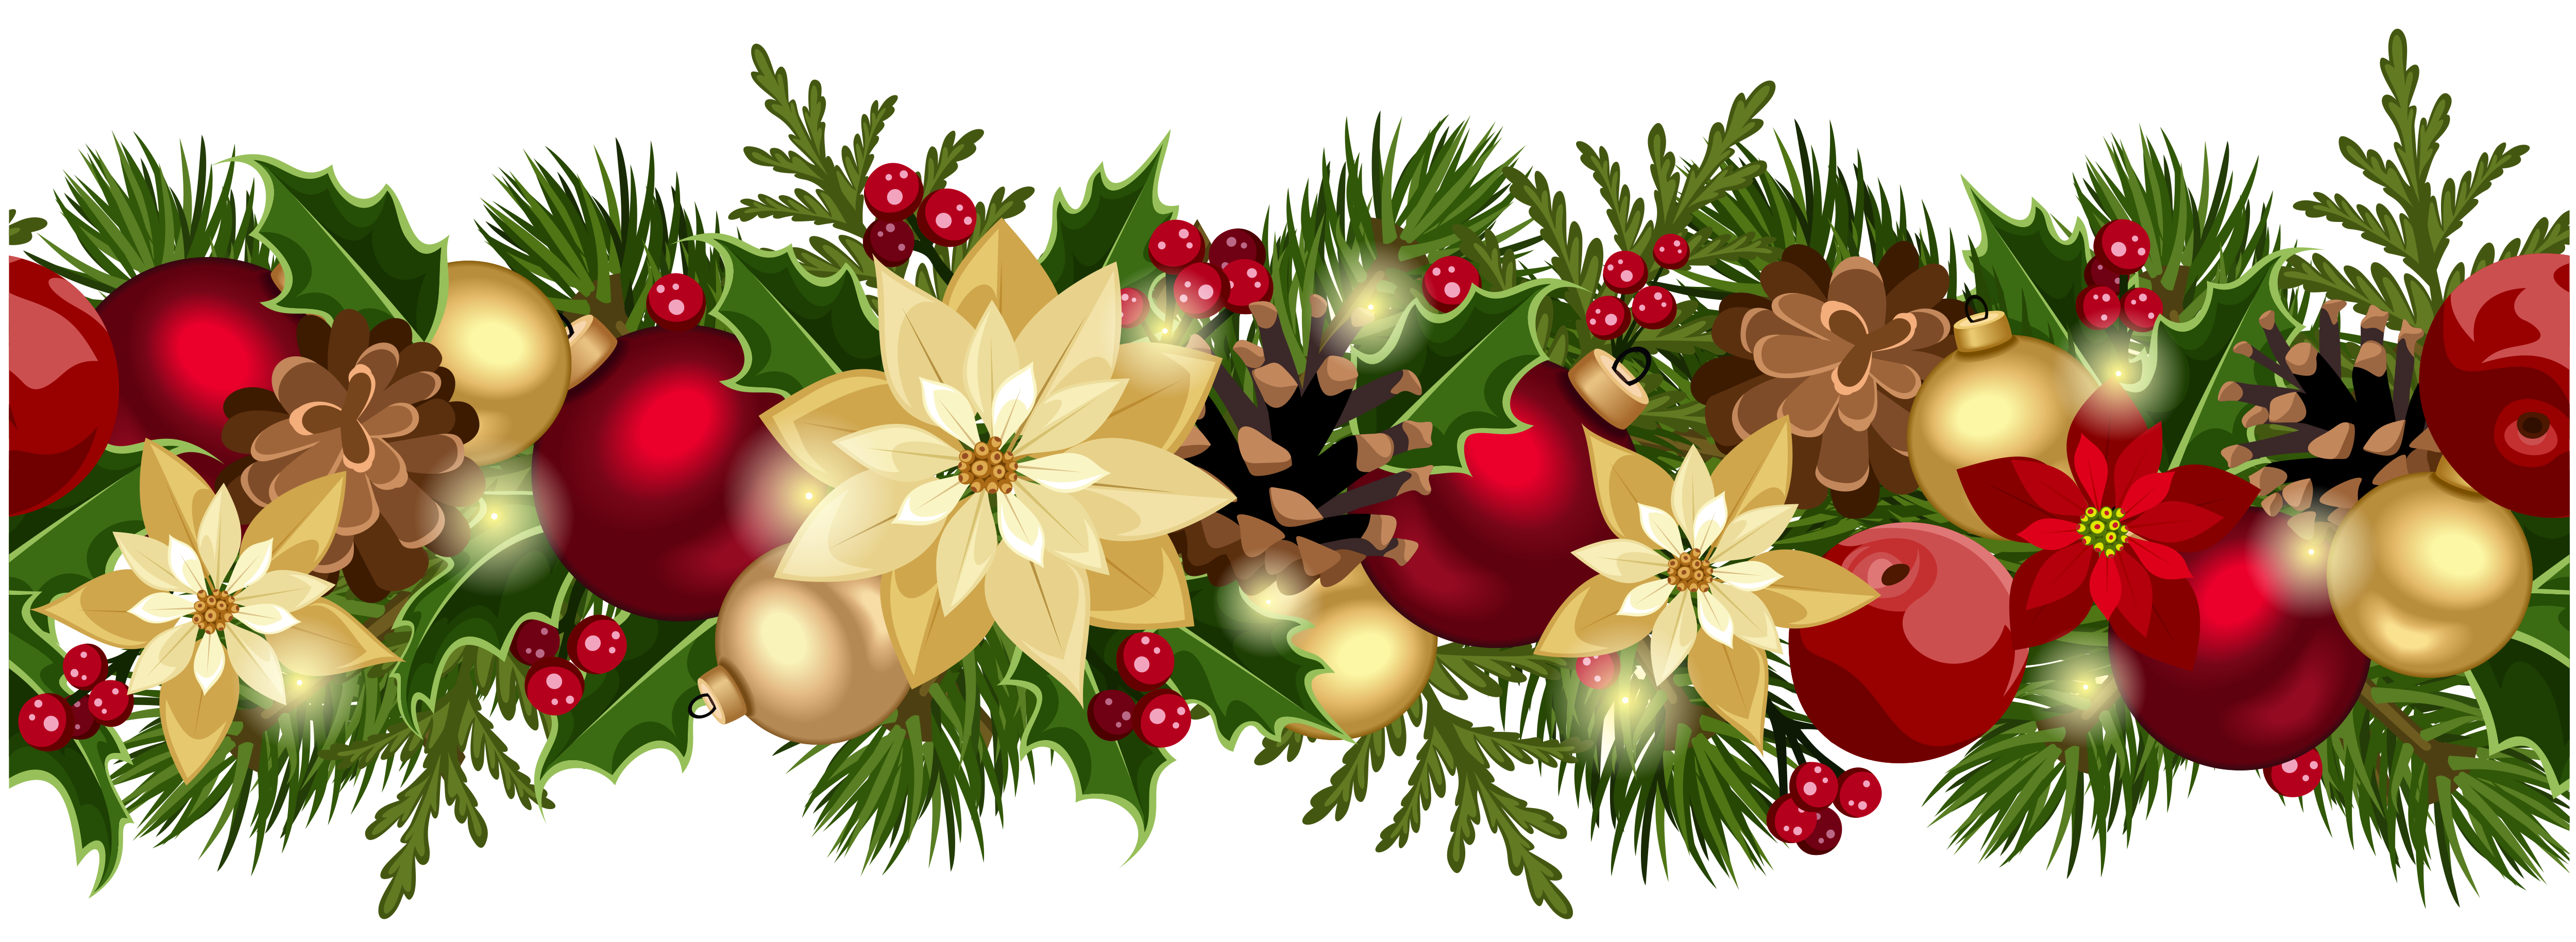 Christmas decorative garland png. Poinsettias clipart ornament